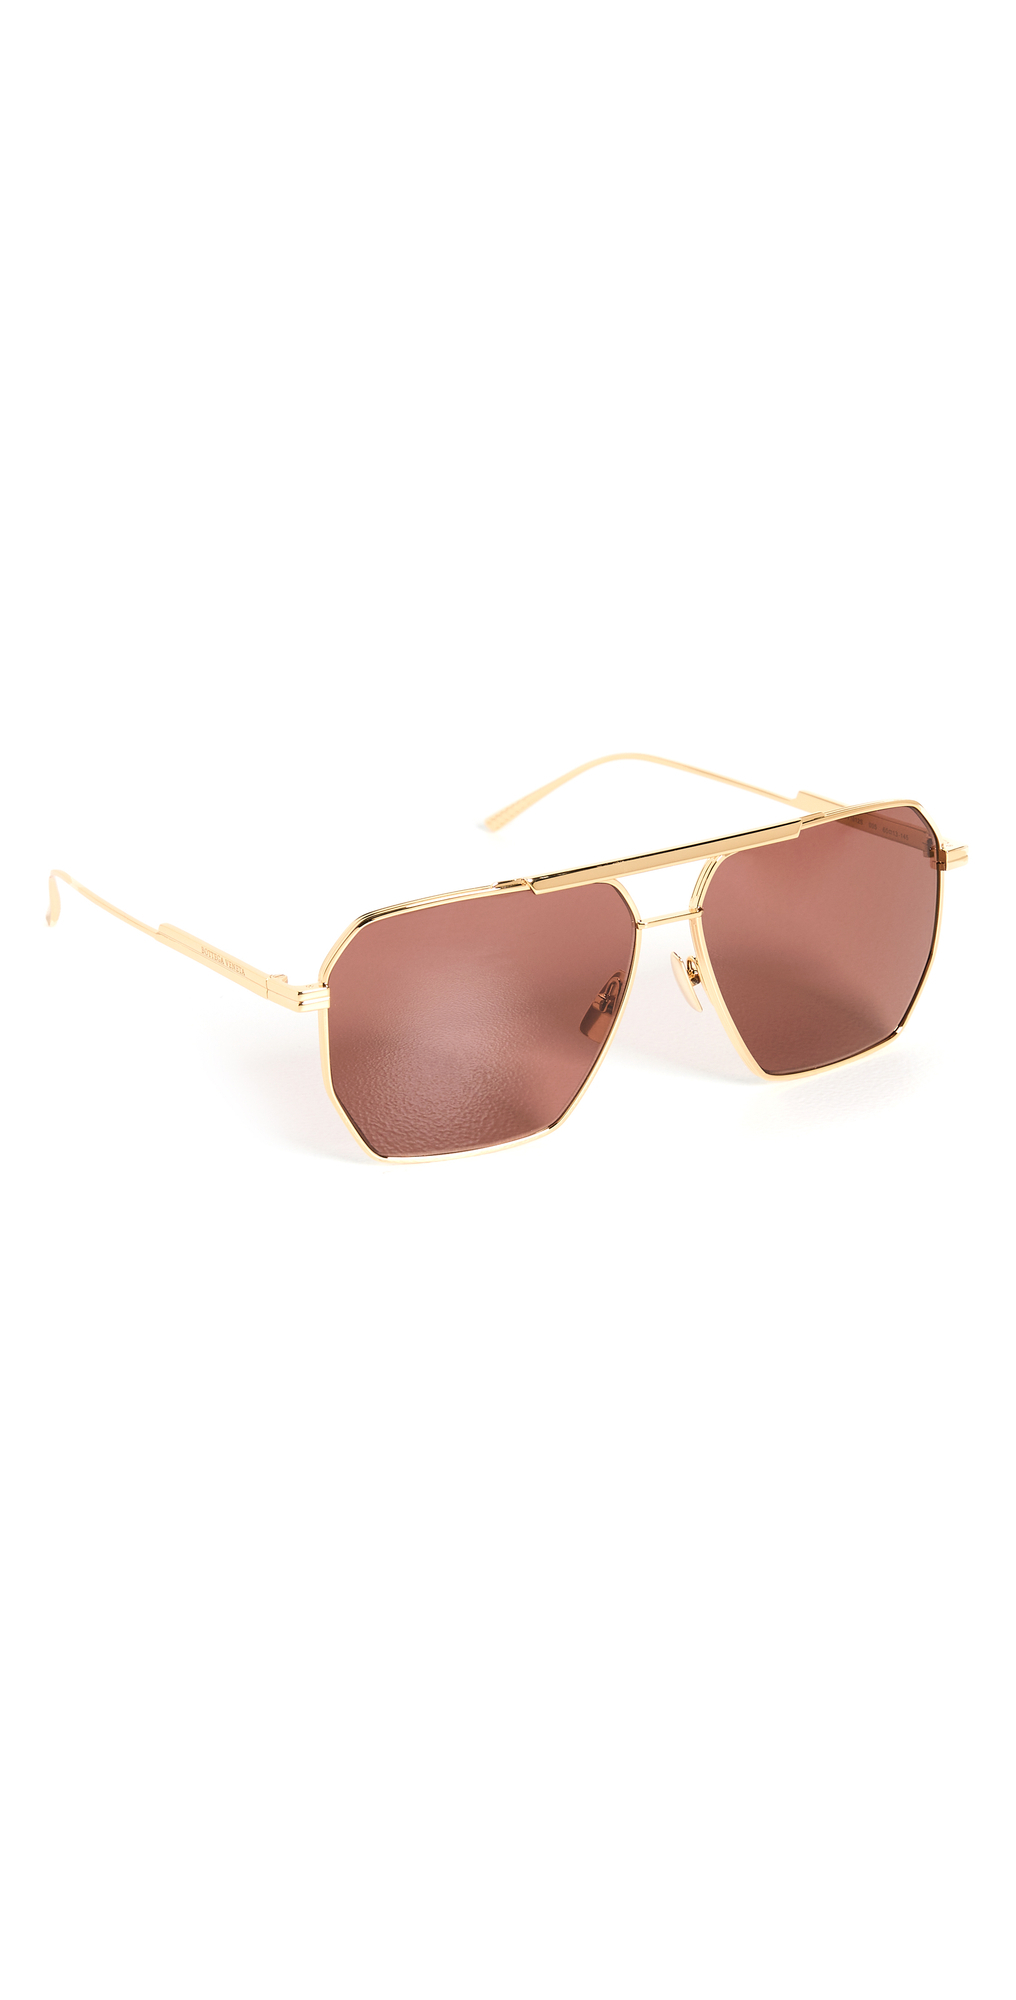 Bottega Veneta Geometric Navigator Sunglasses in brown / gold